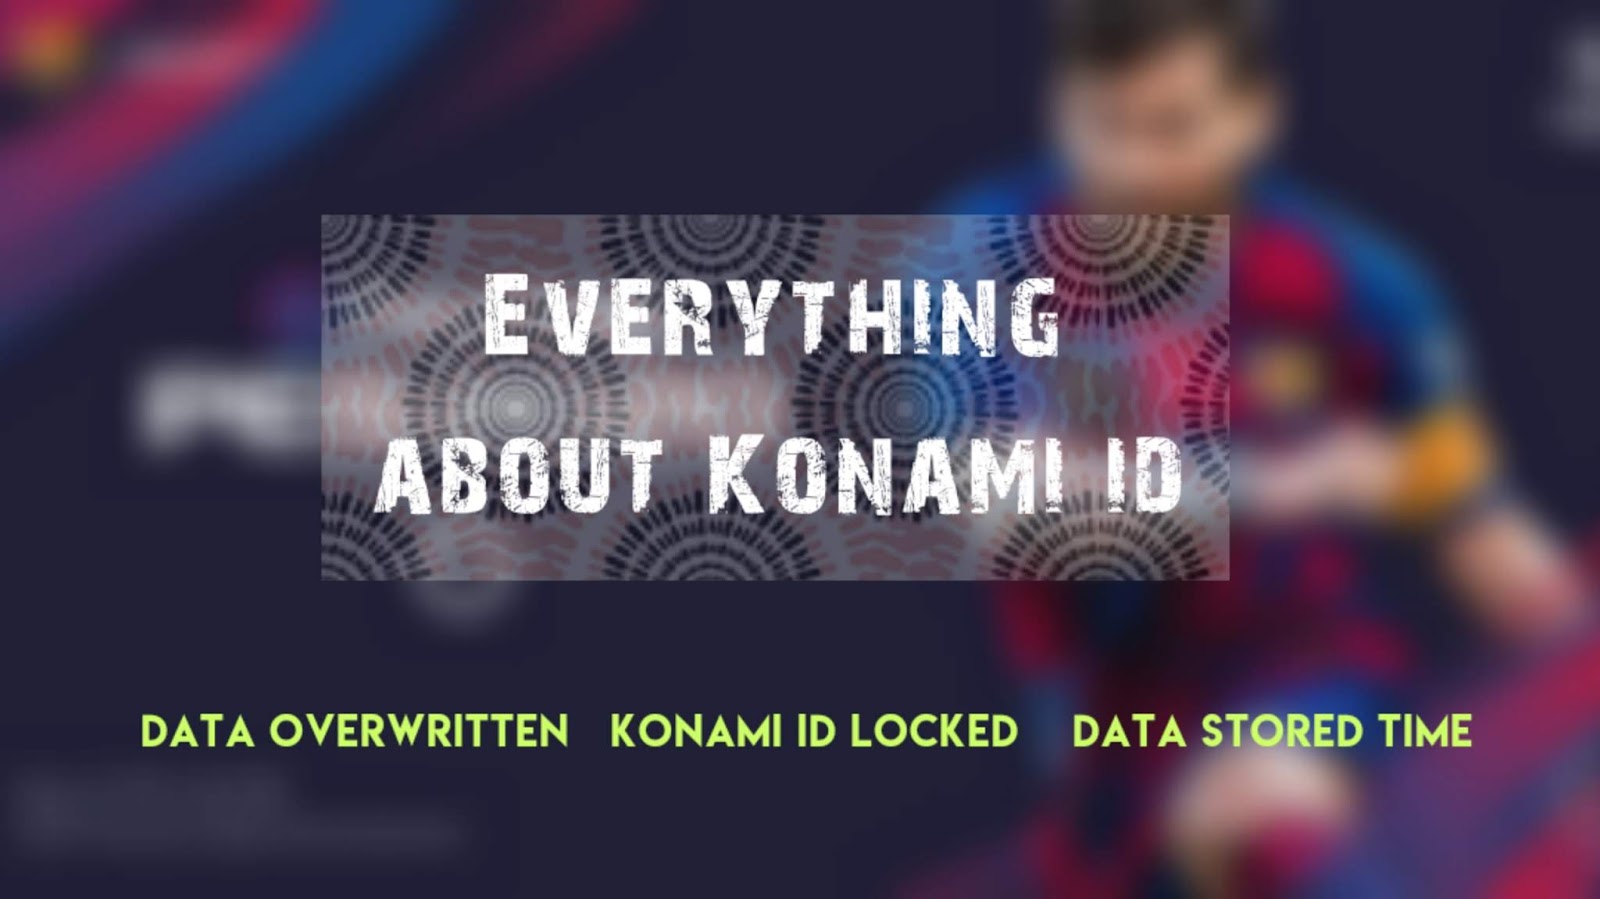 Konami Id Faq In Pes Mobile Android Ios Avoid Data Overwritten